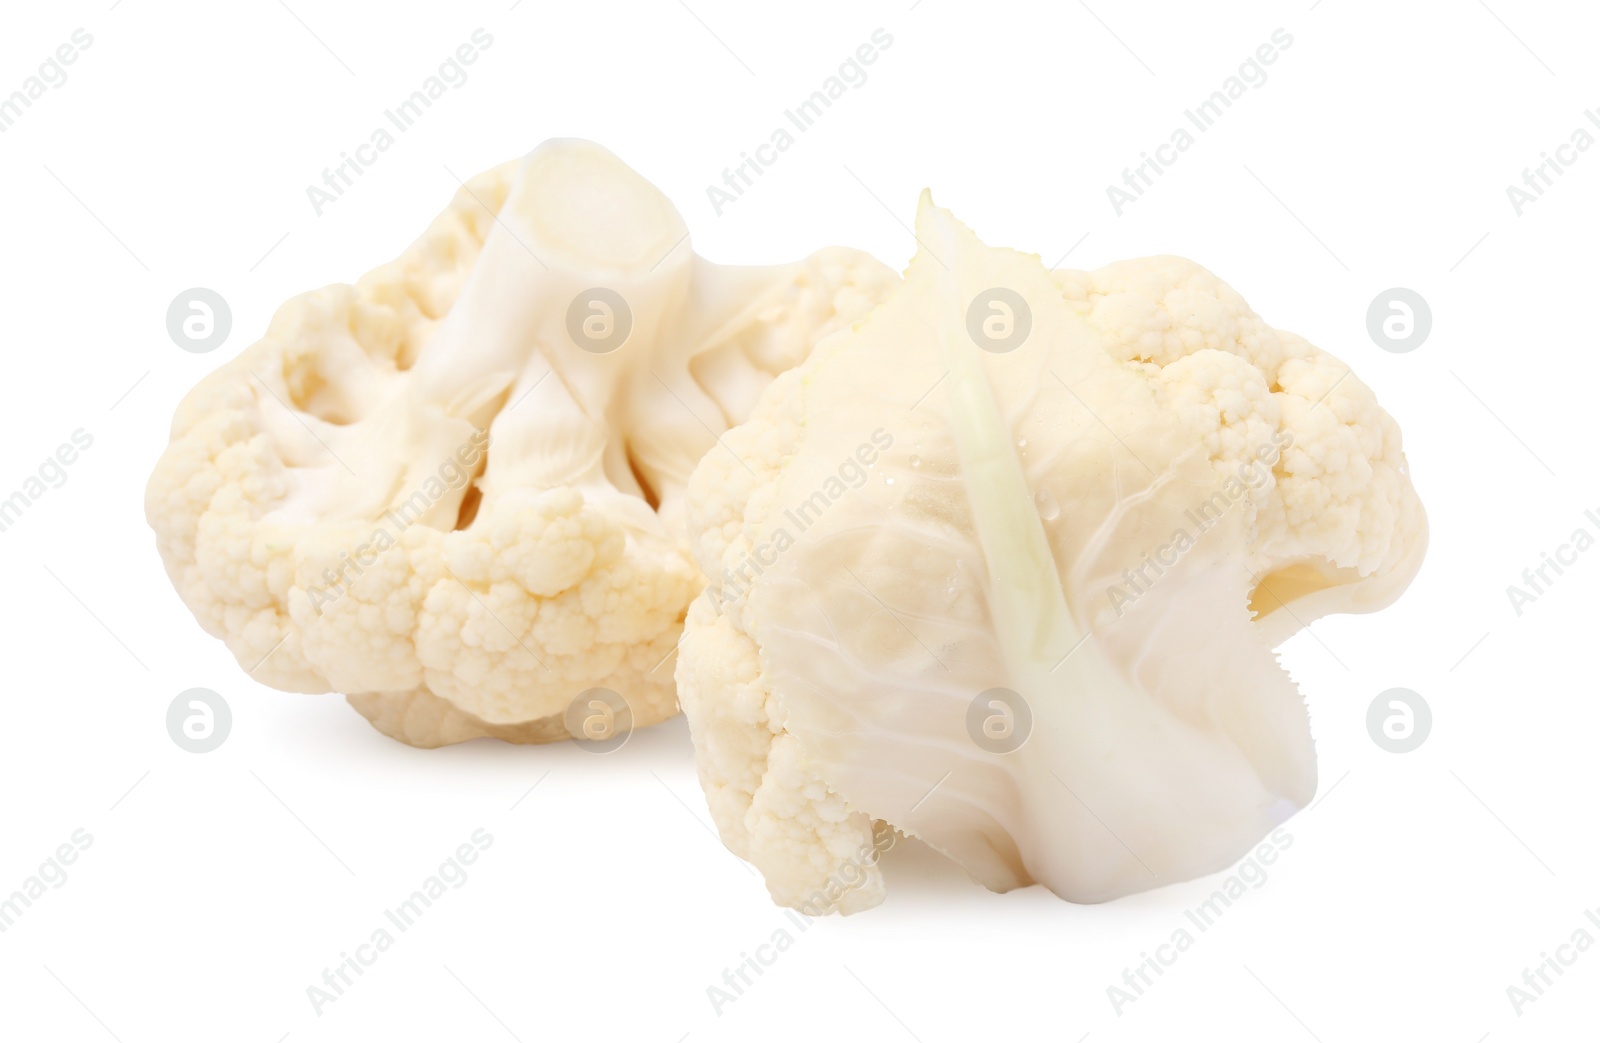 Photo of Cut fresh raw cauliflowers on white background